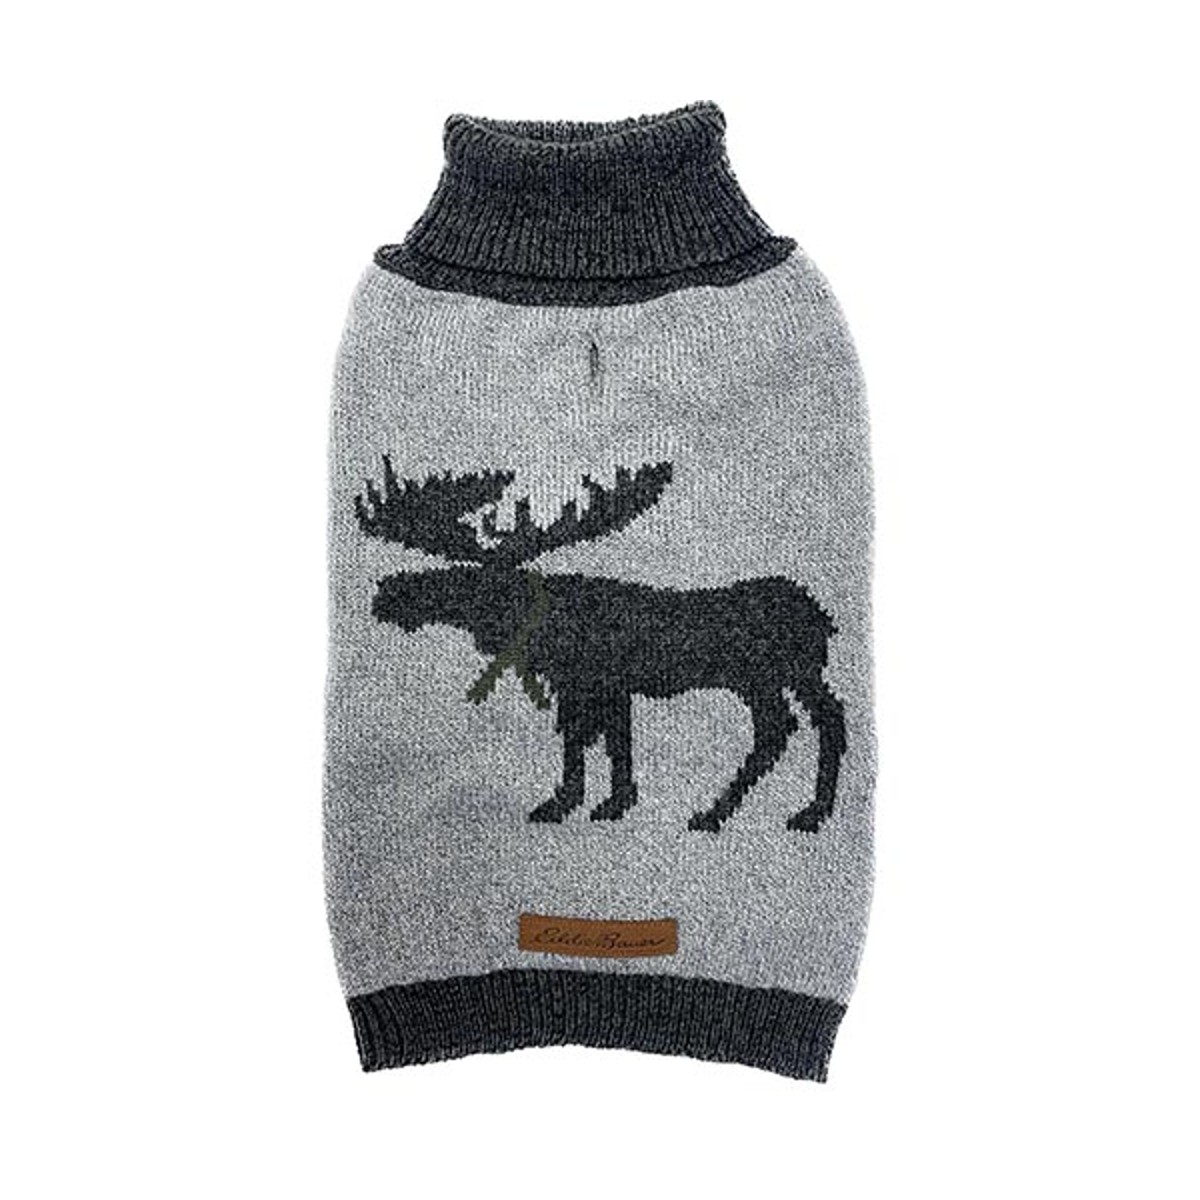 Eddie Bauer Moose Turtleneck Dog Sweater - Heathered Gray